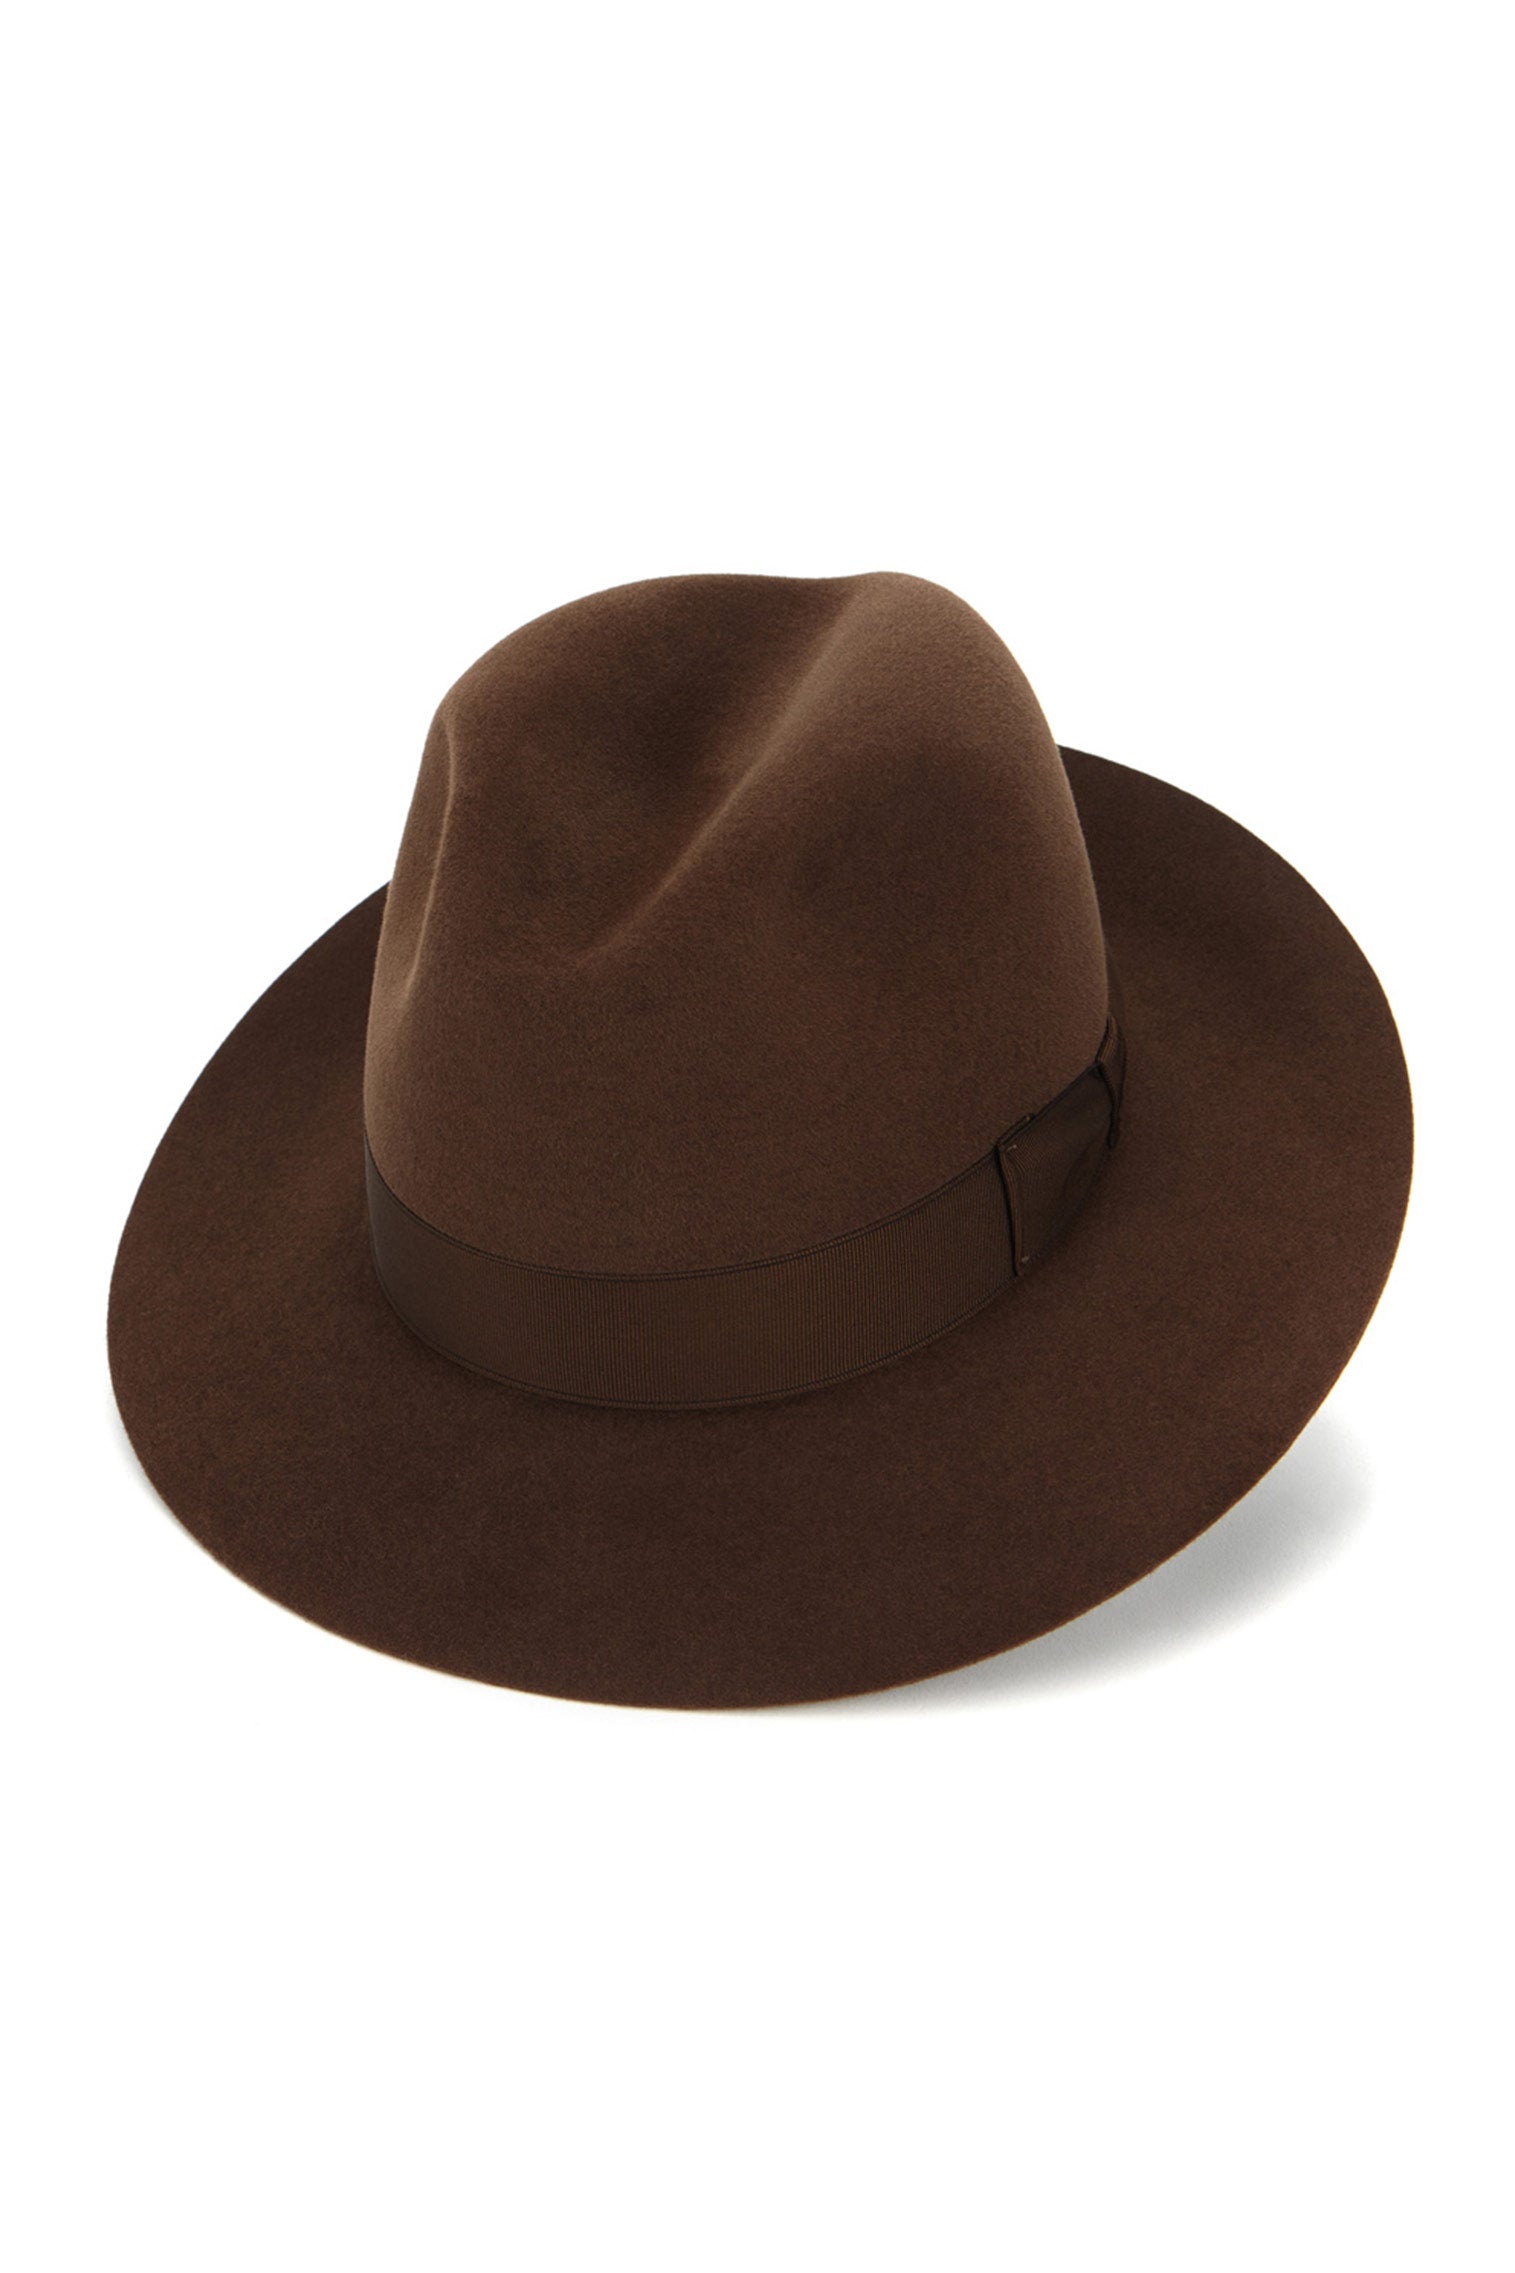 Haydock Fedora - Hats for Long Face Shapes - Lock & Co. Hatters London UK